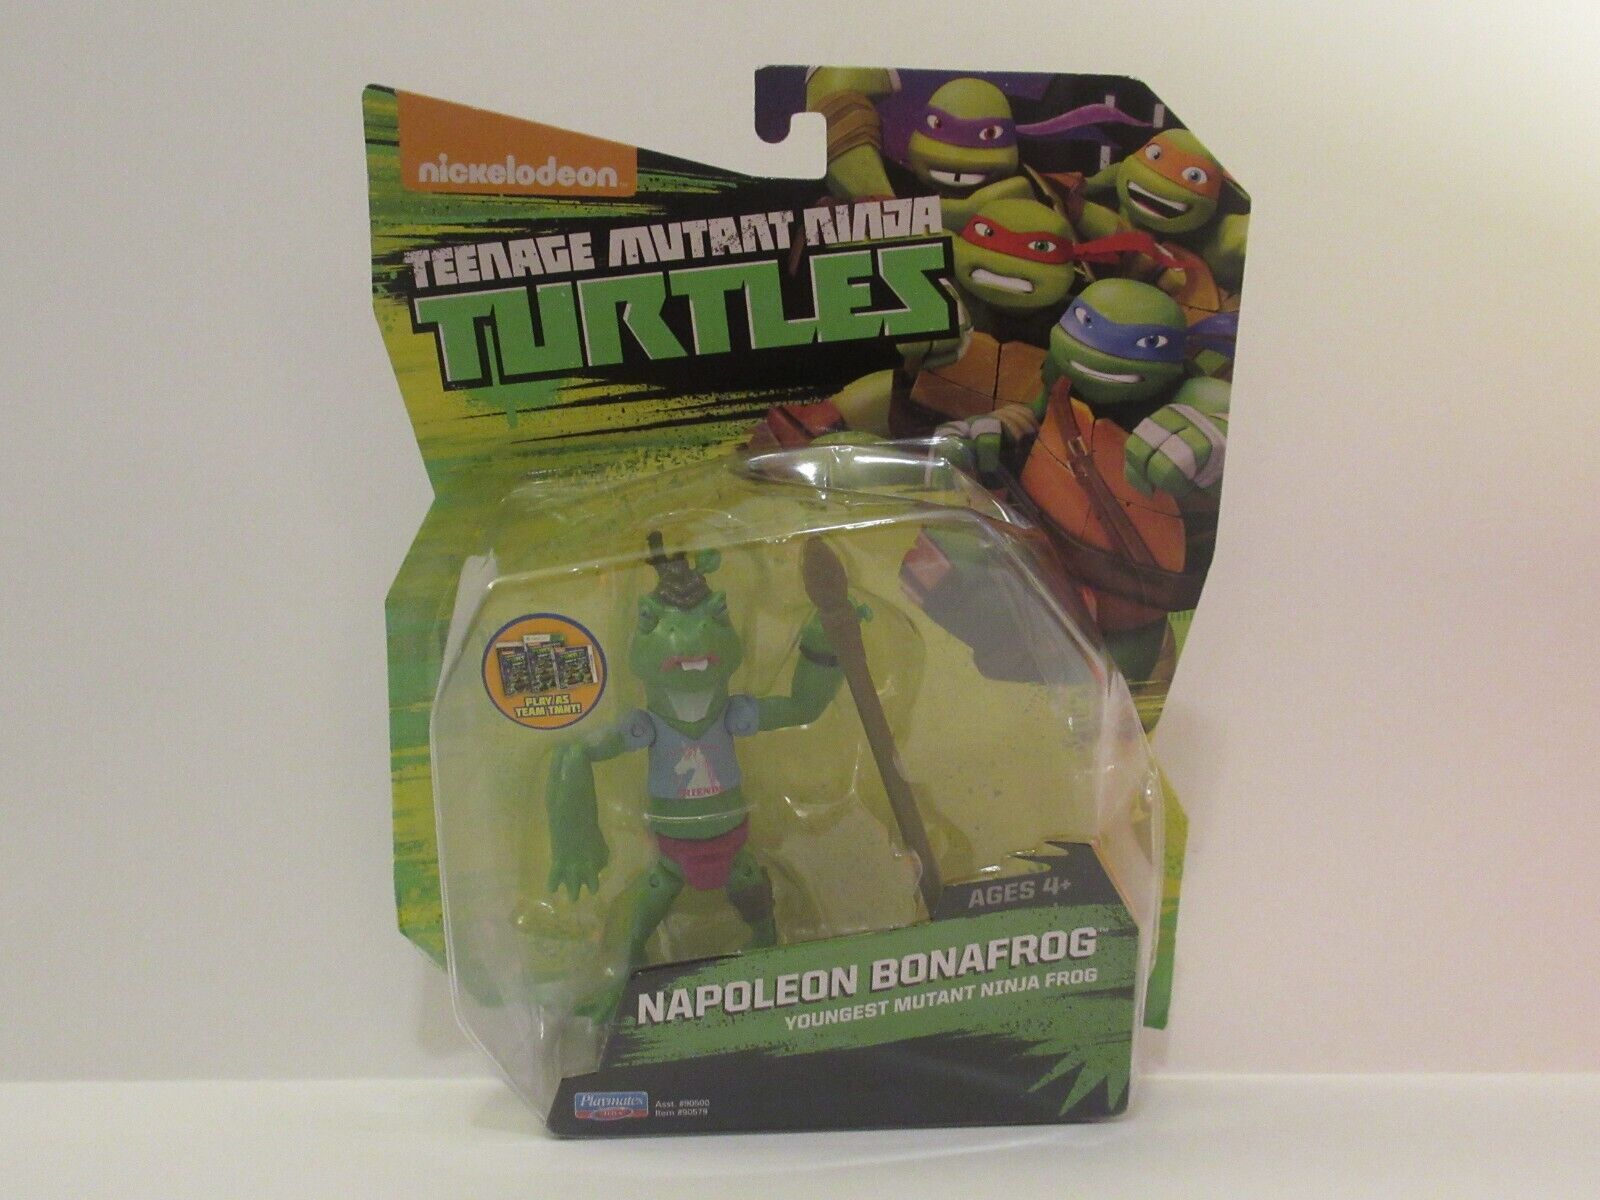 Teenage Mutant Ninja Turtles TMNT Nickelodeon Action Figure - Napoleon Bonafrog